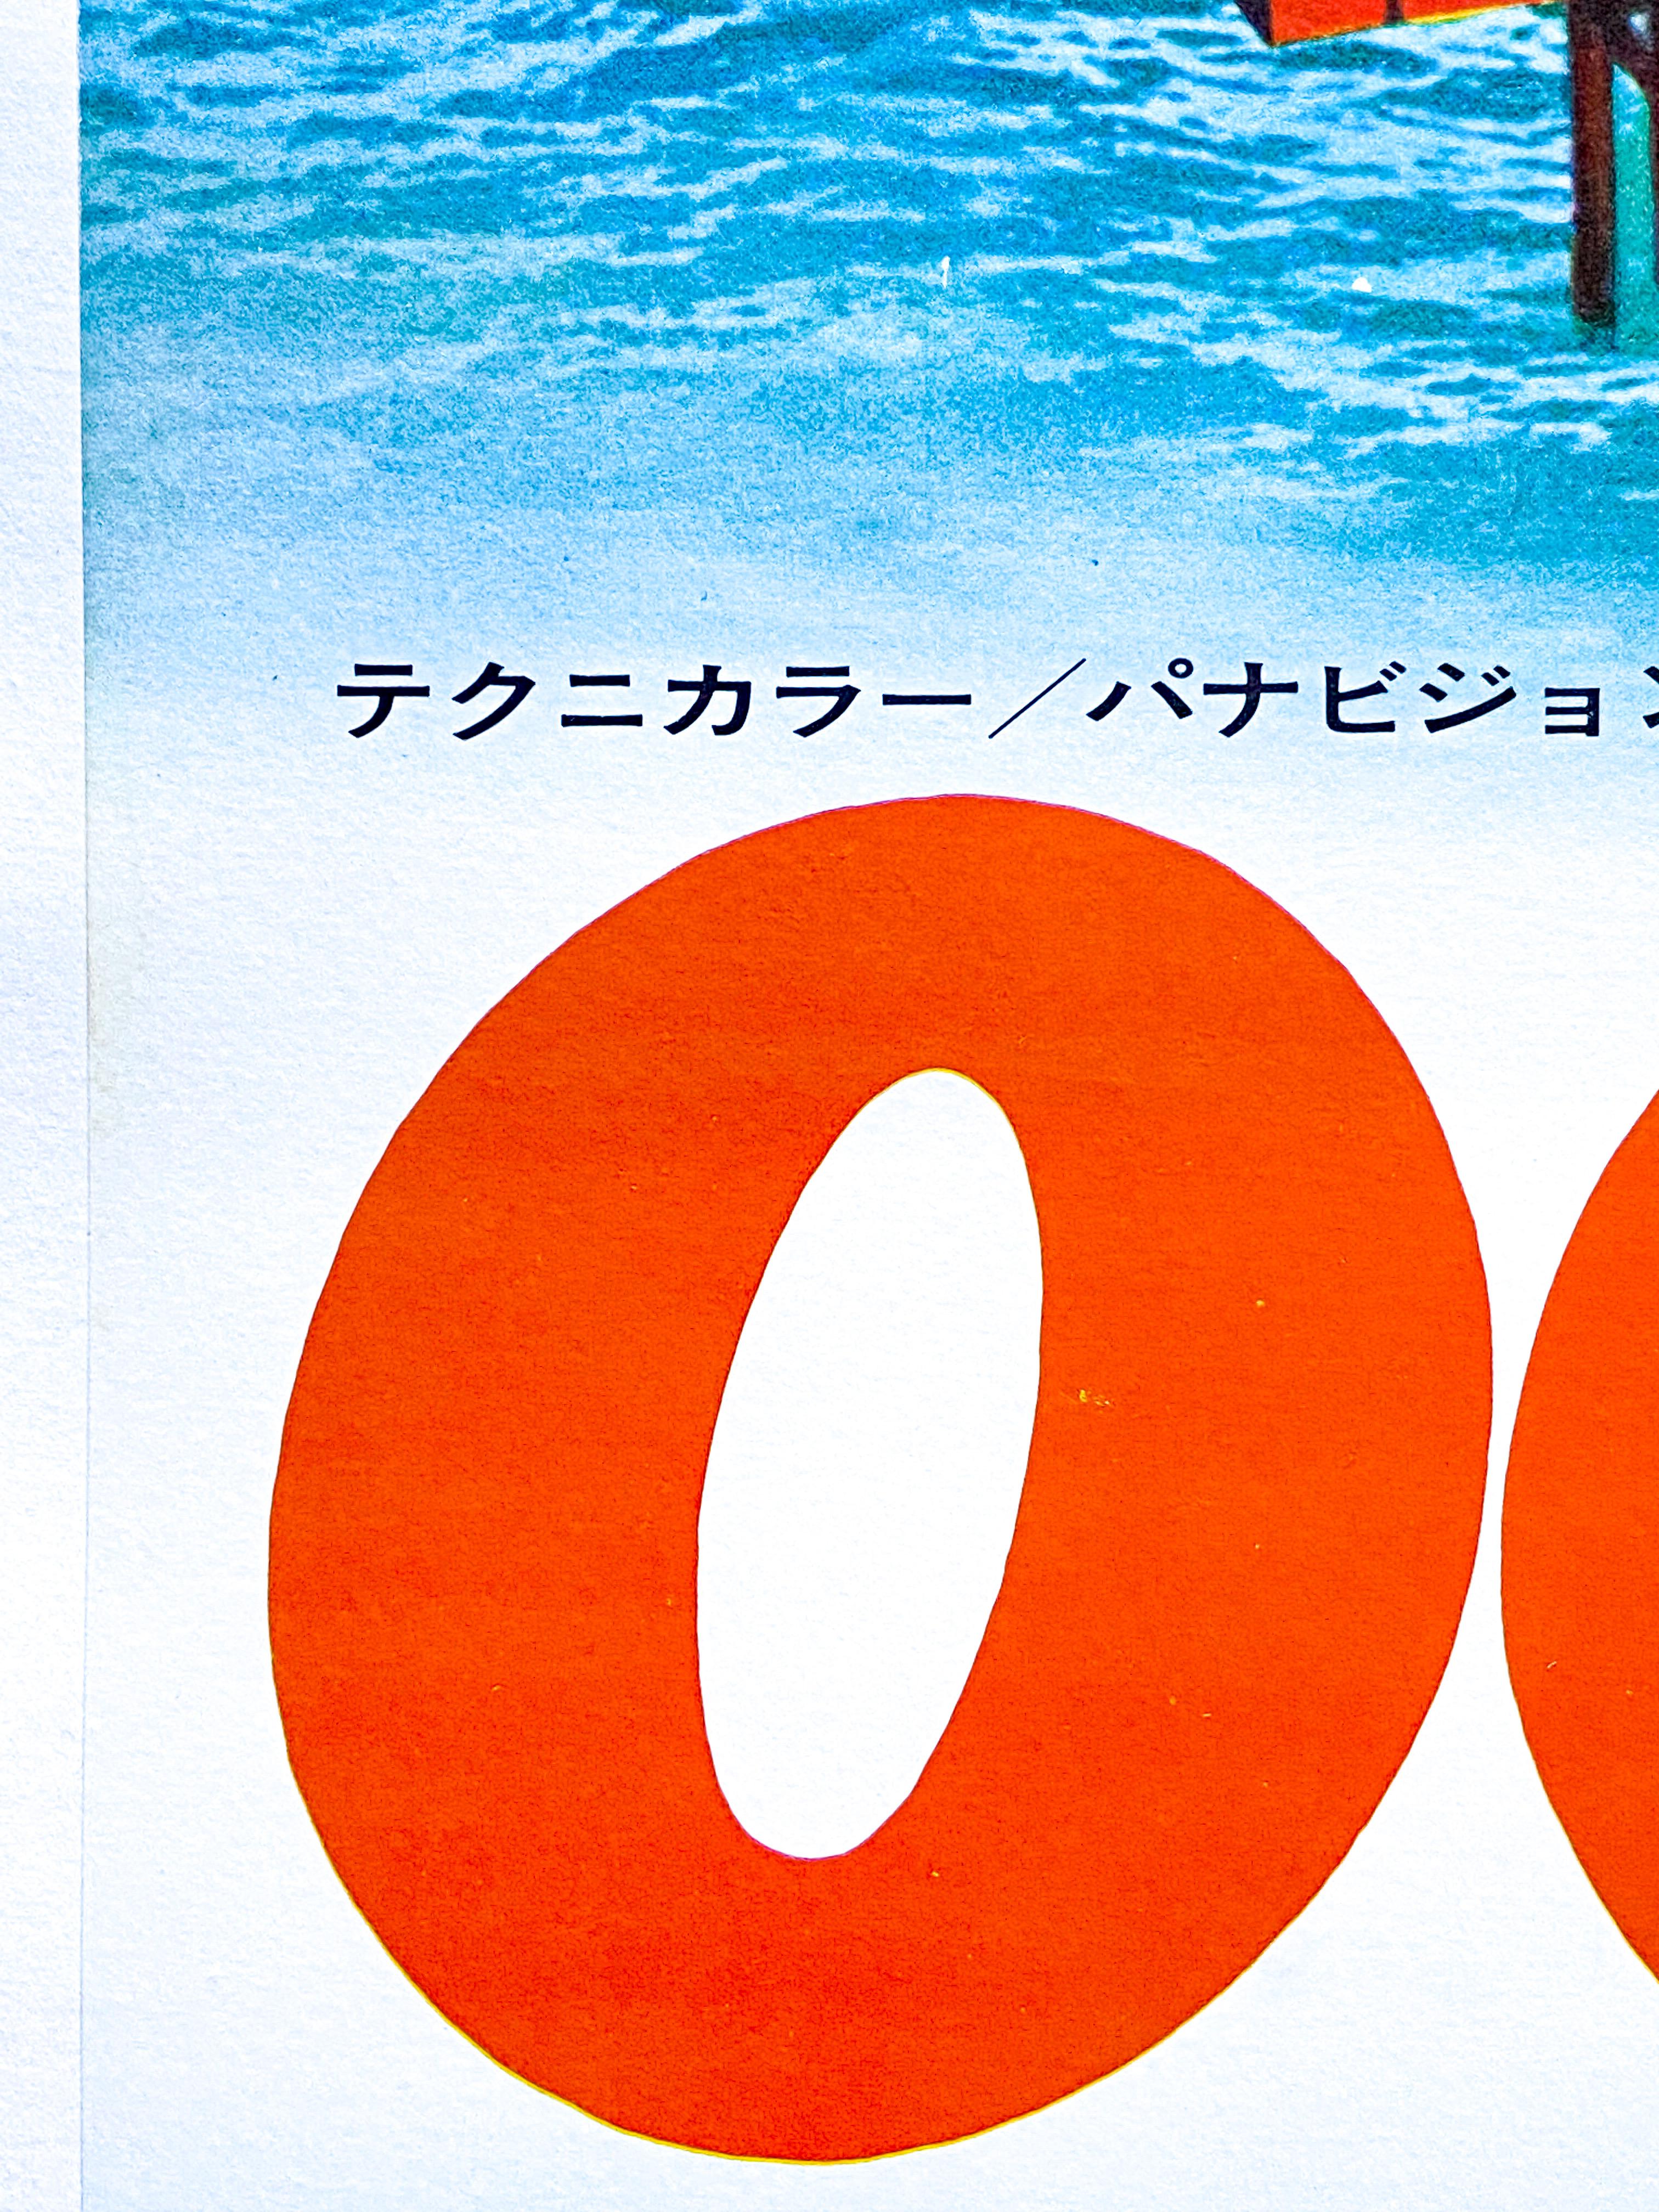 James Bond 'Diamonds Are Forever' Original Vintage Japanese Movie Poster, 1971 For Sale 6